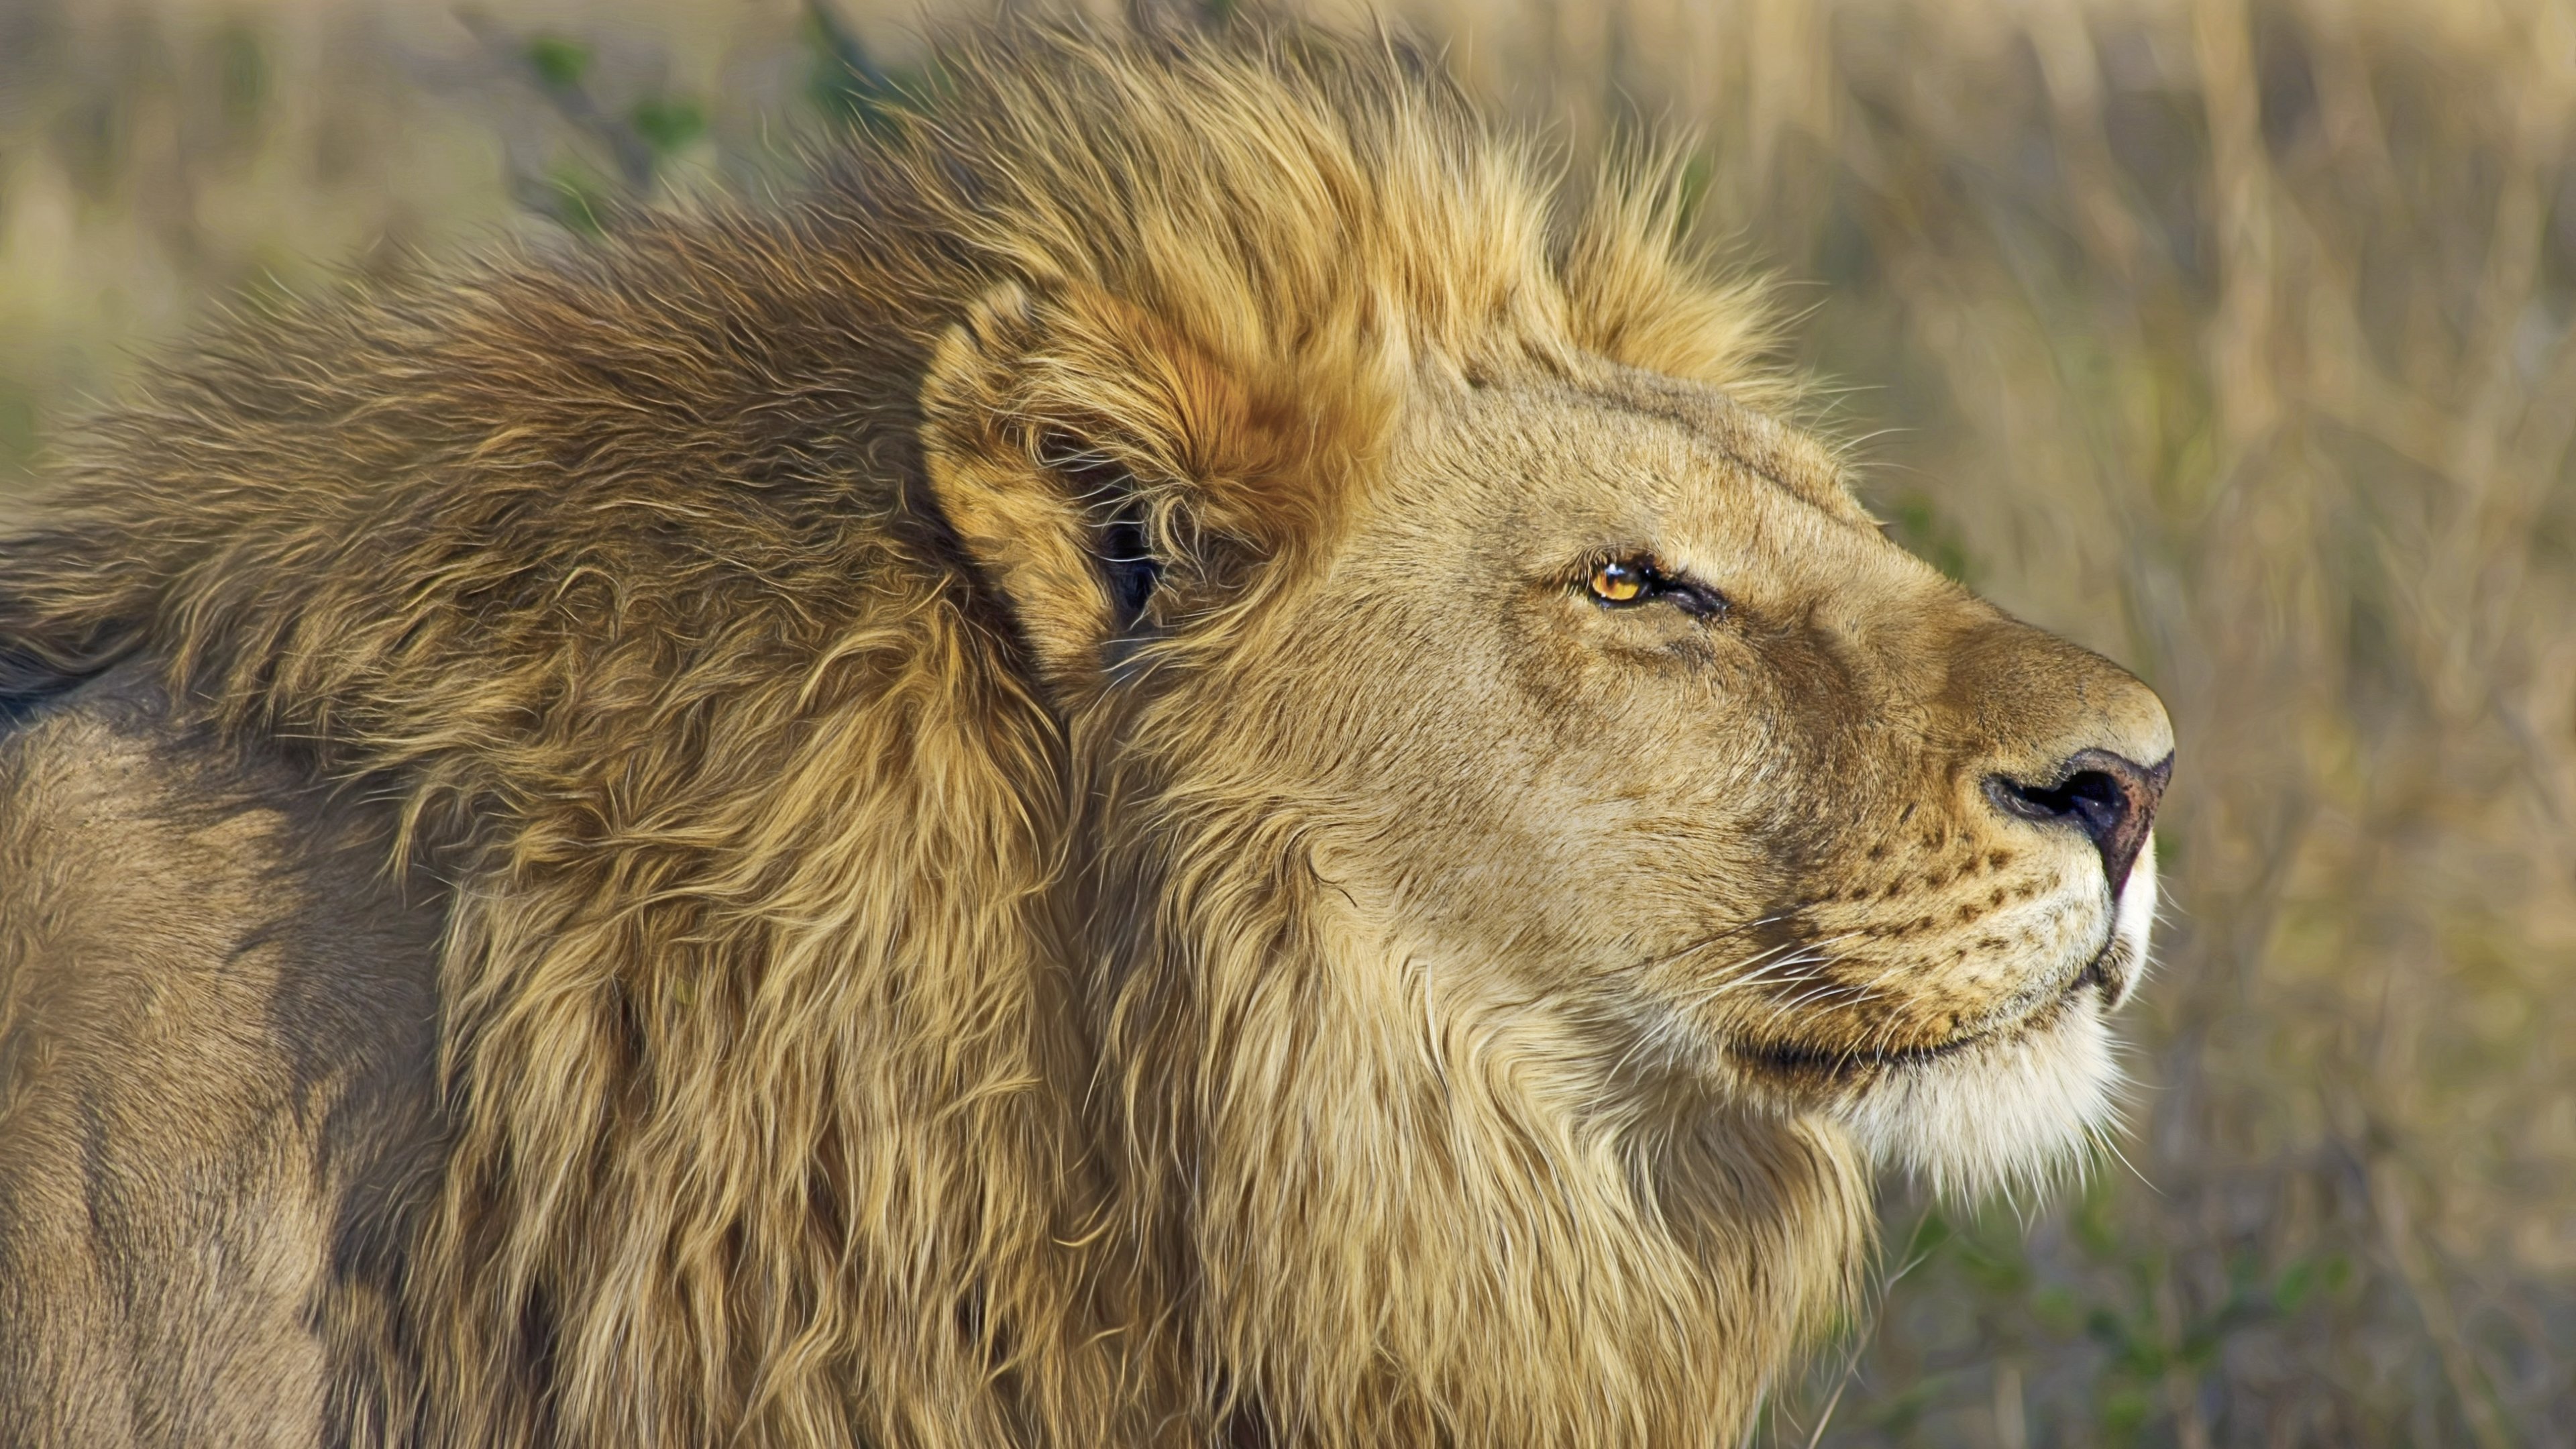 The Lion King by Michael Siebert